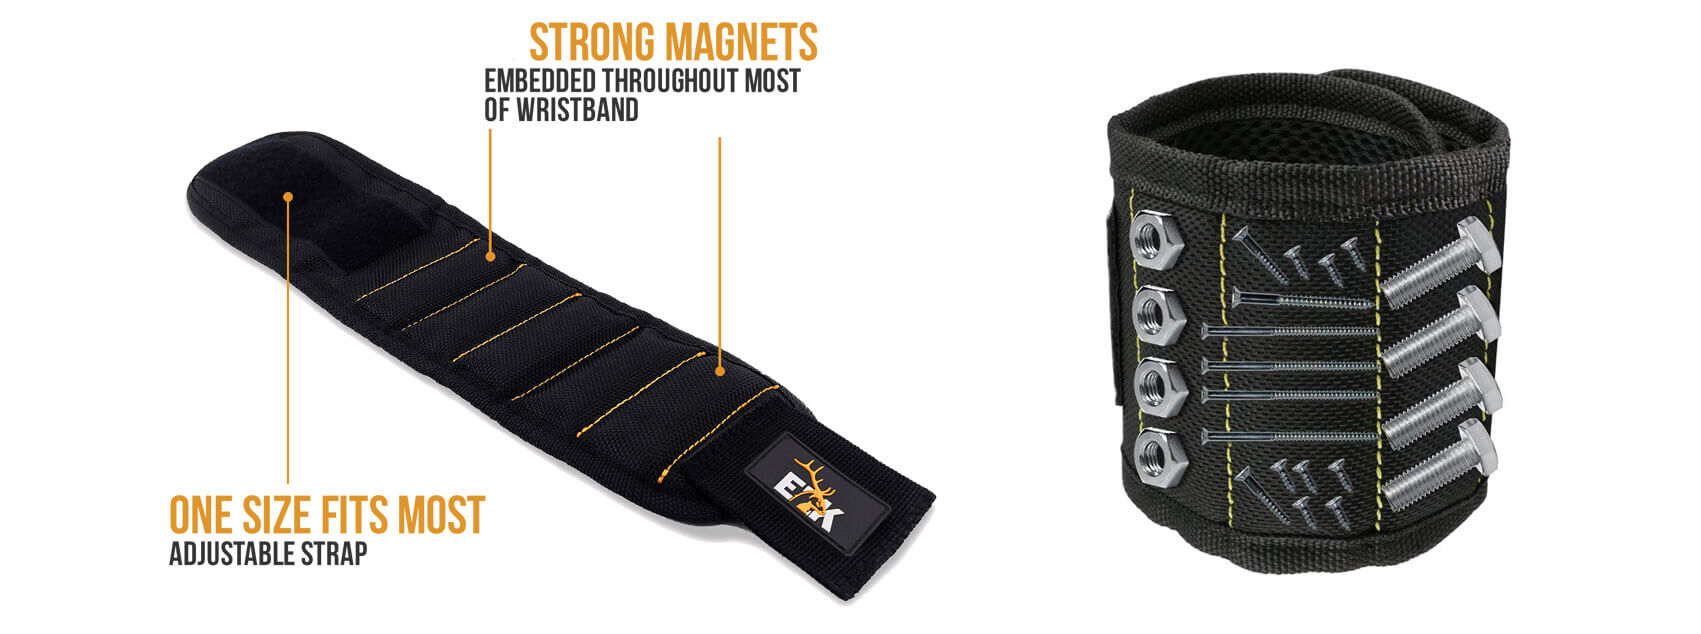 Magnetic Wristband - SDM Magnetics Co., Ltd.